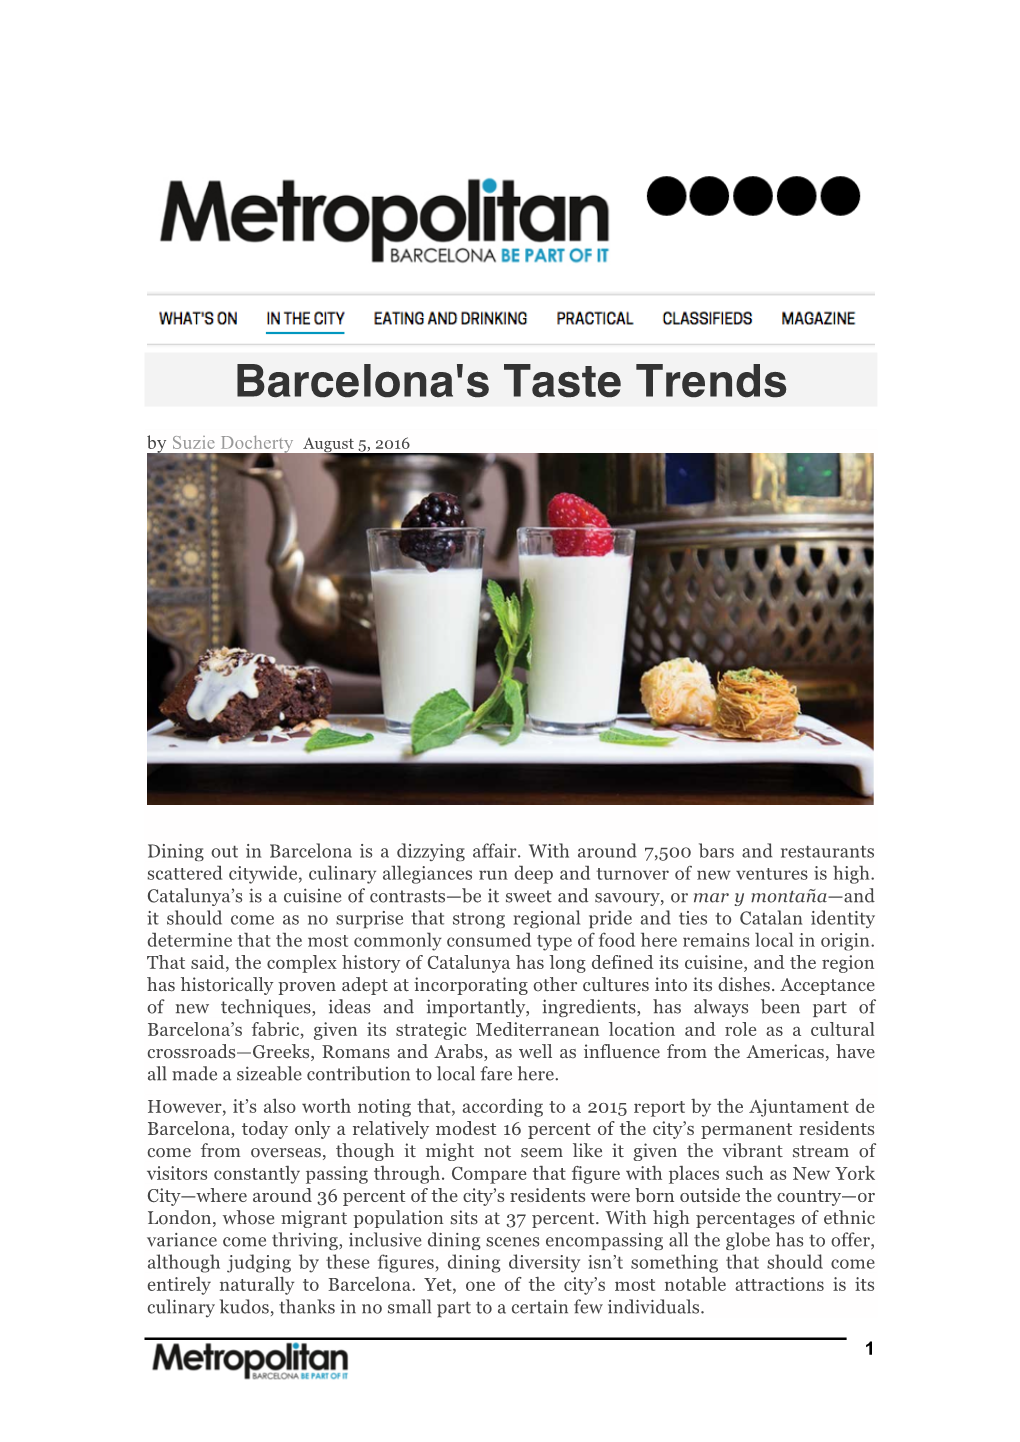 Barcelona's Taste Trends by Suzie Docherty August 5, 2016